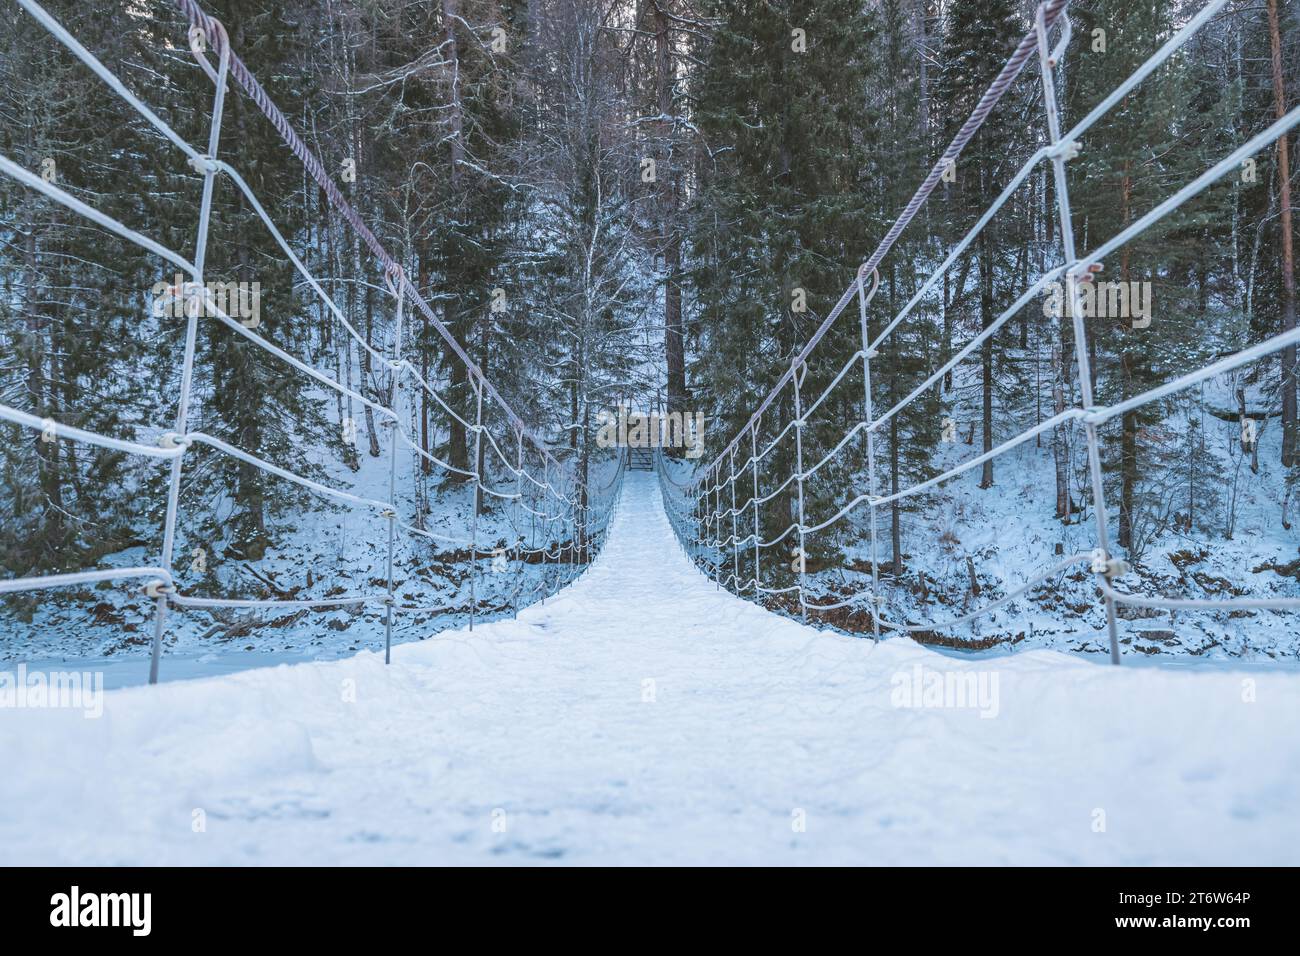 Wunderschöne, an einem Seil hängende Holzbrücke über den Fluss. Winterlandschaft, schneebedeckter Wald. Perspektive, Symmetrie Stockfoto